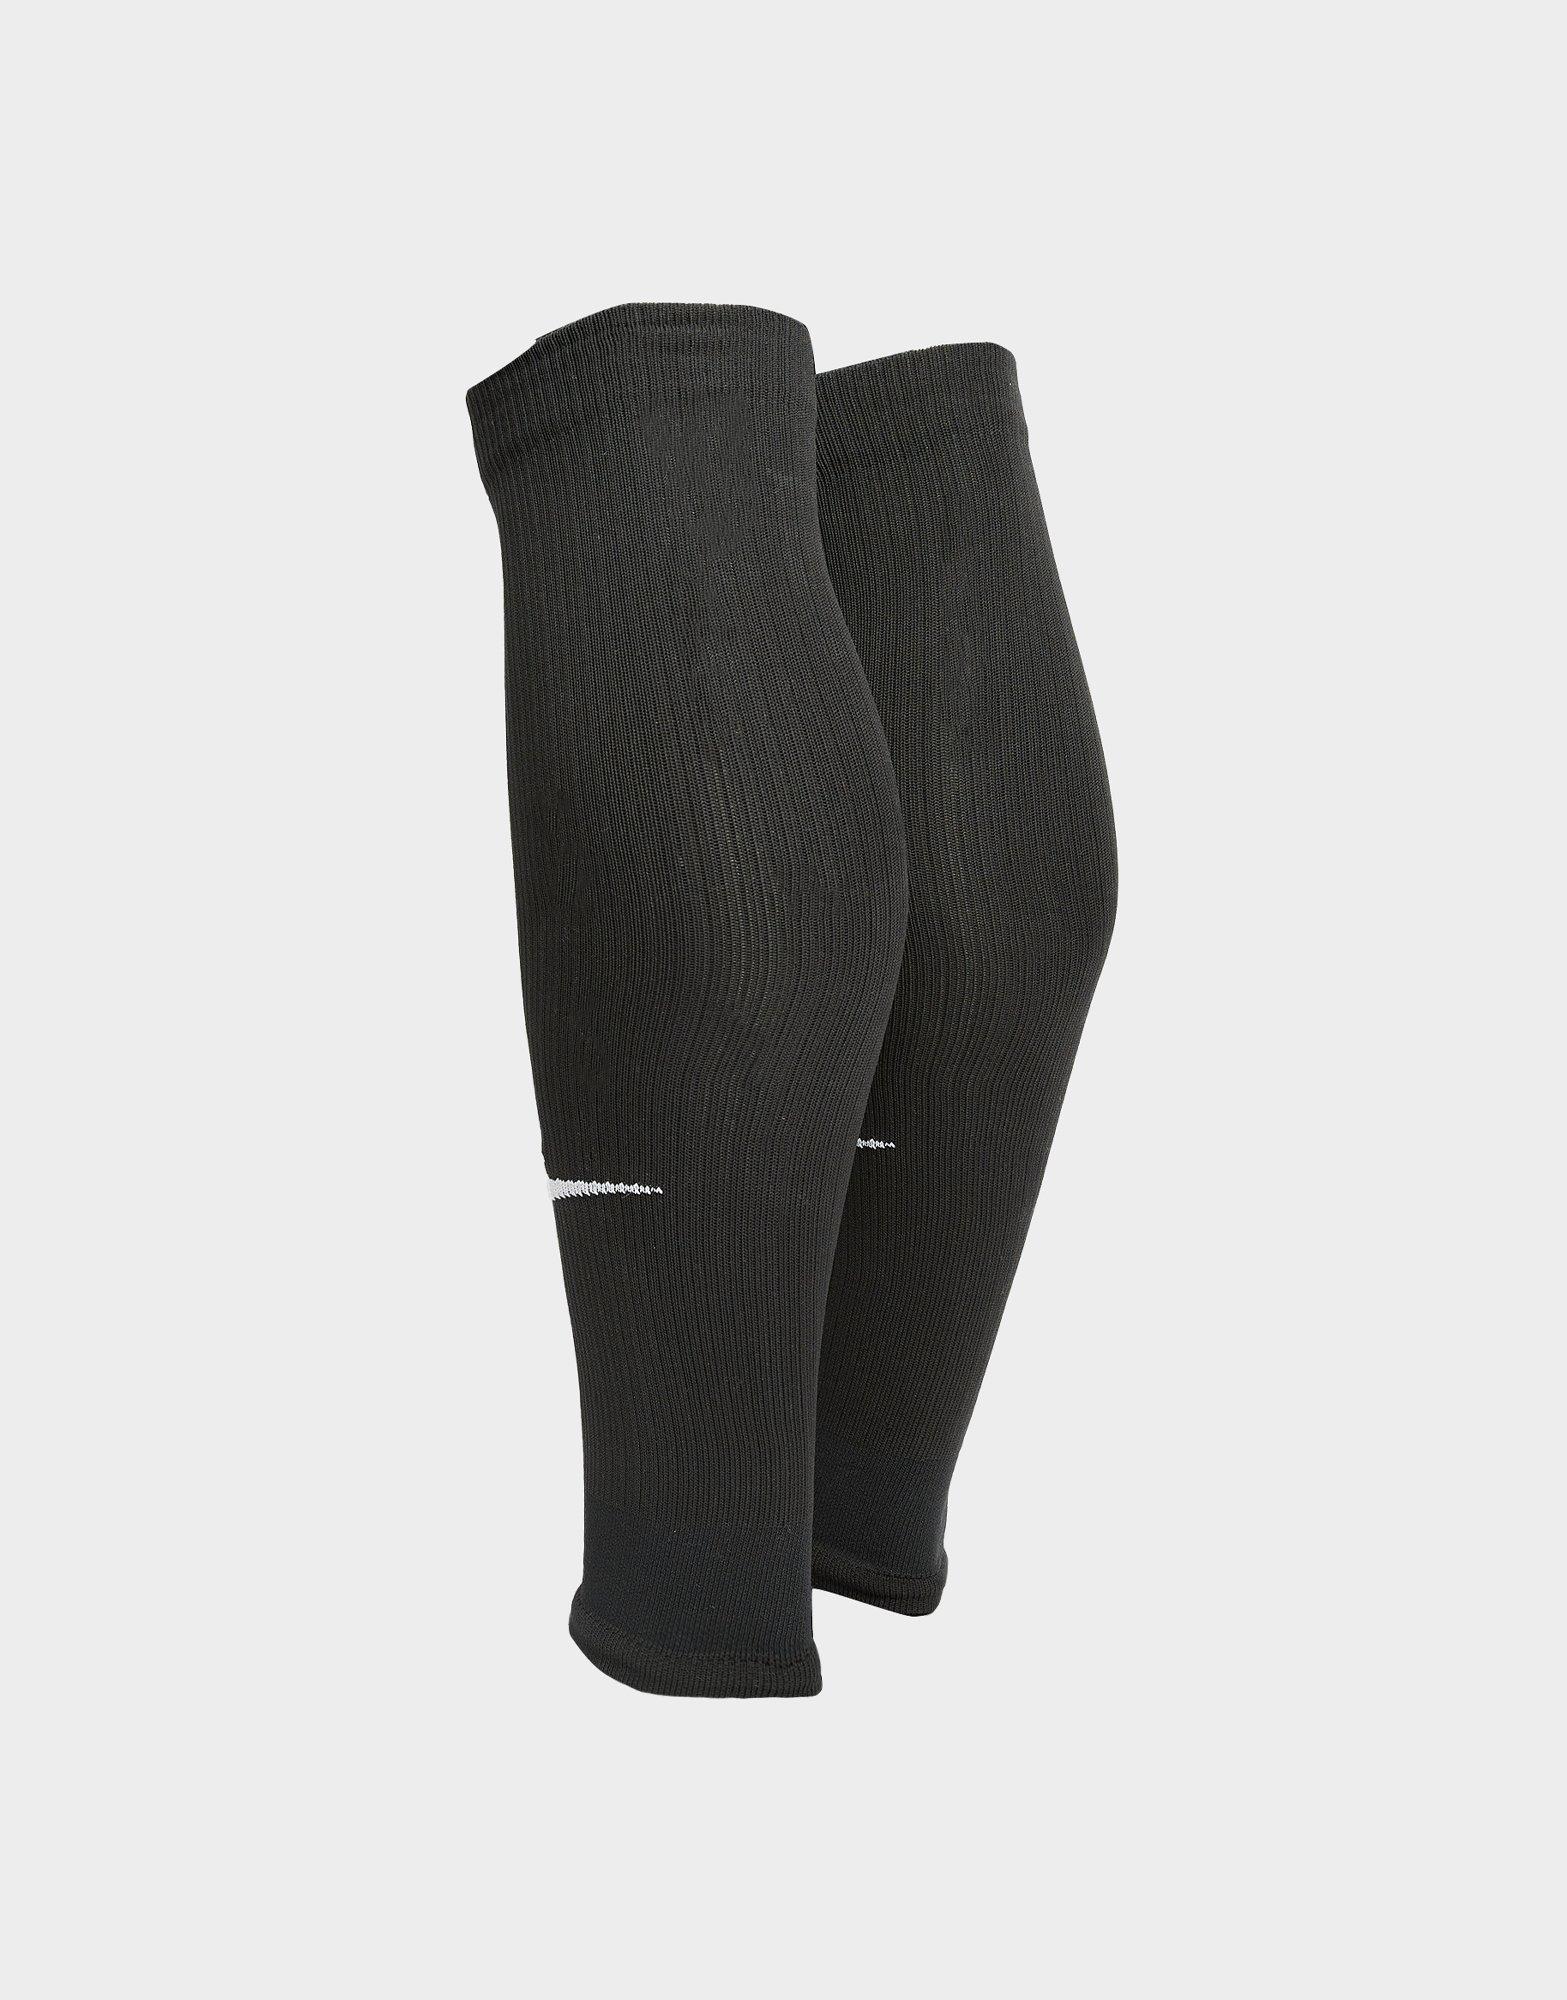 Nike Leg Sleeves - Black/White